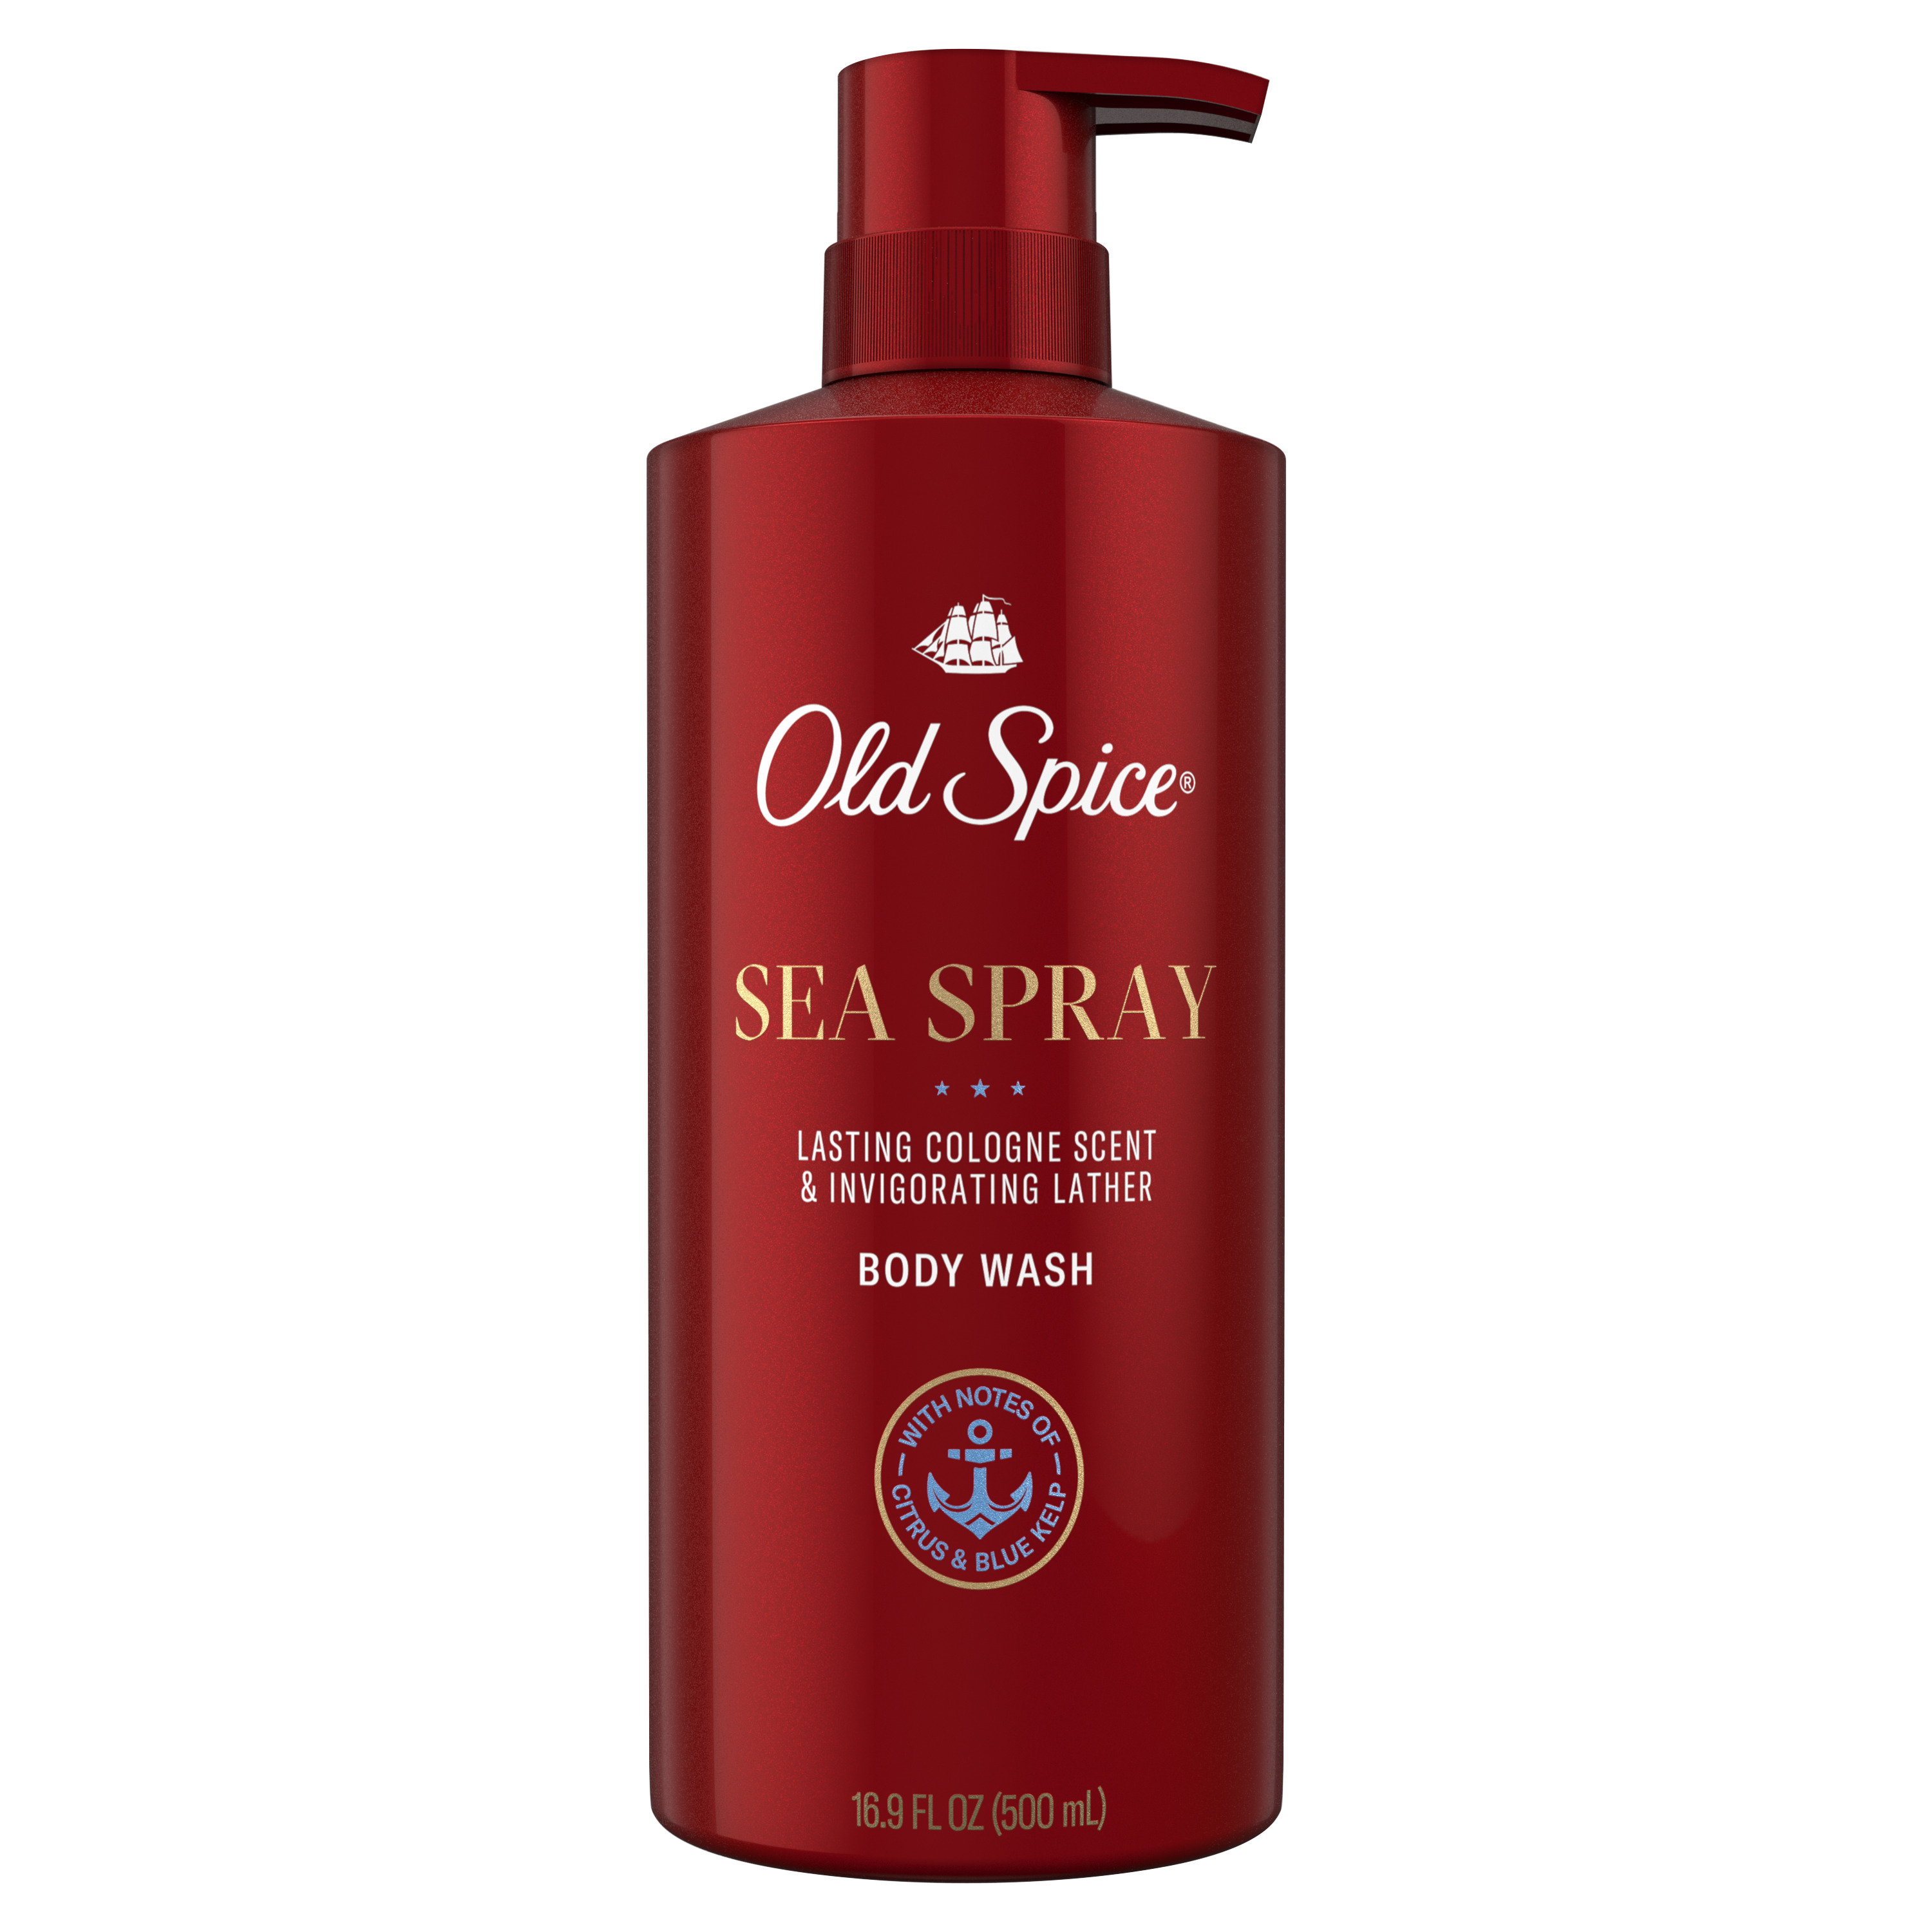 Old Spice Body Wash for Men, Sea Spray Cologne Scent, 16.9 fl oz - image 2 of 6